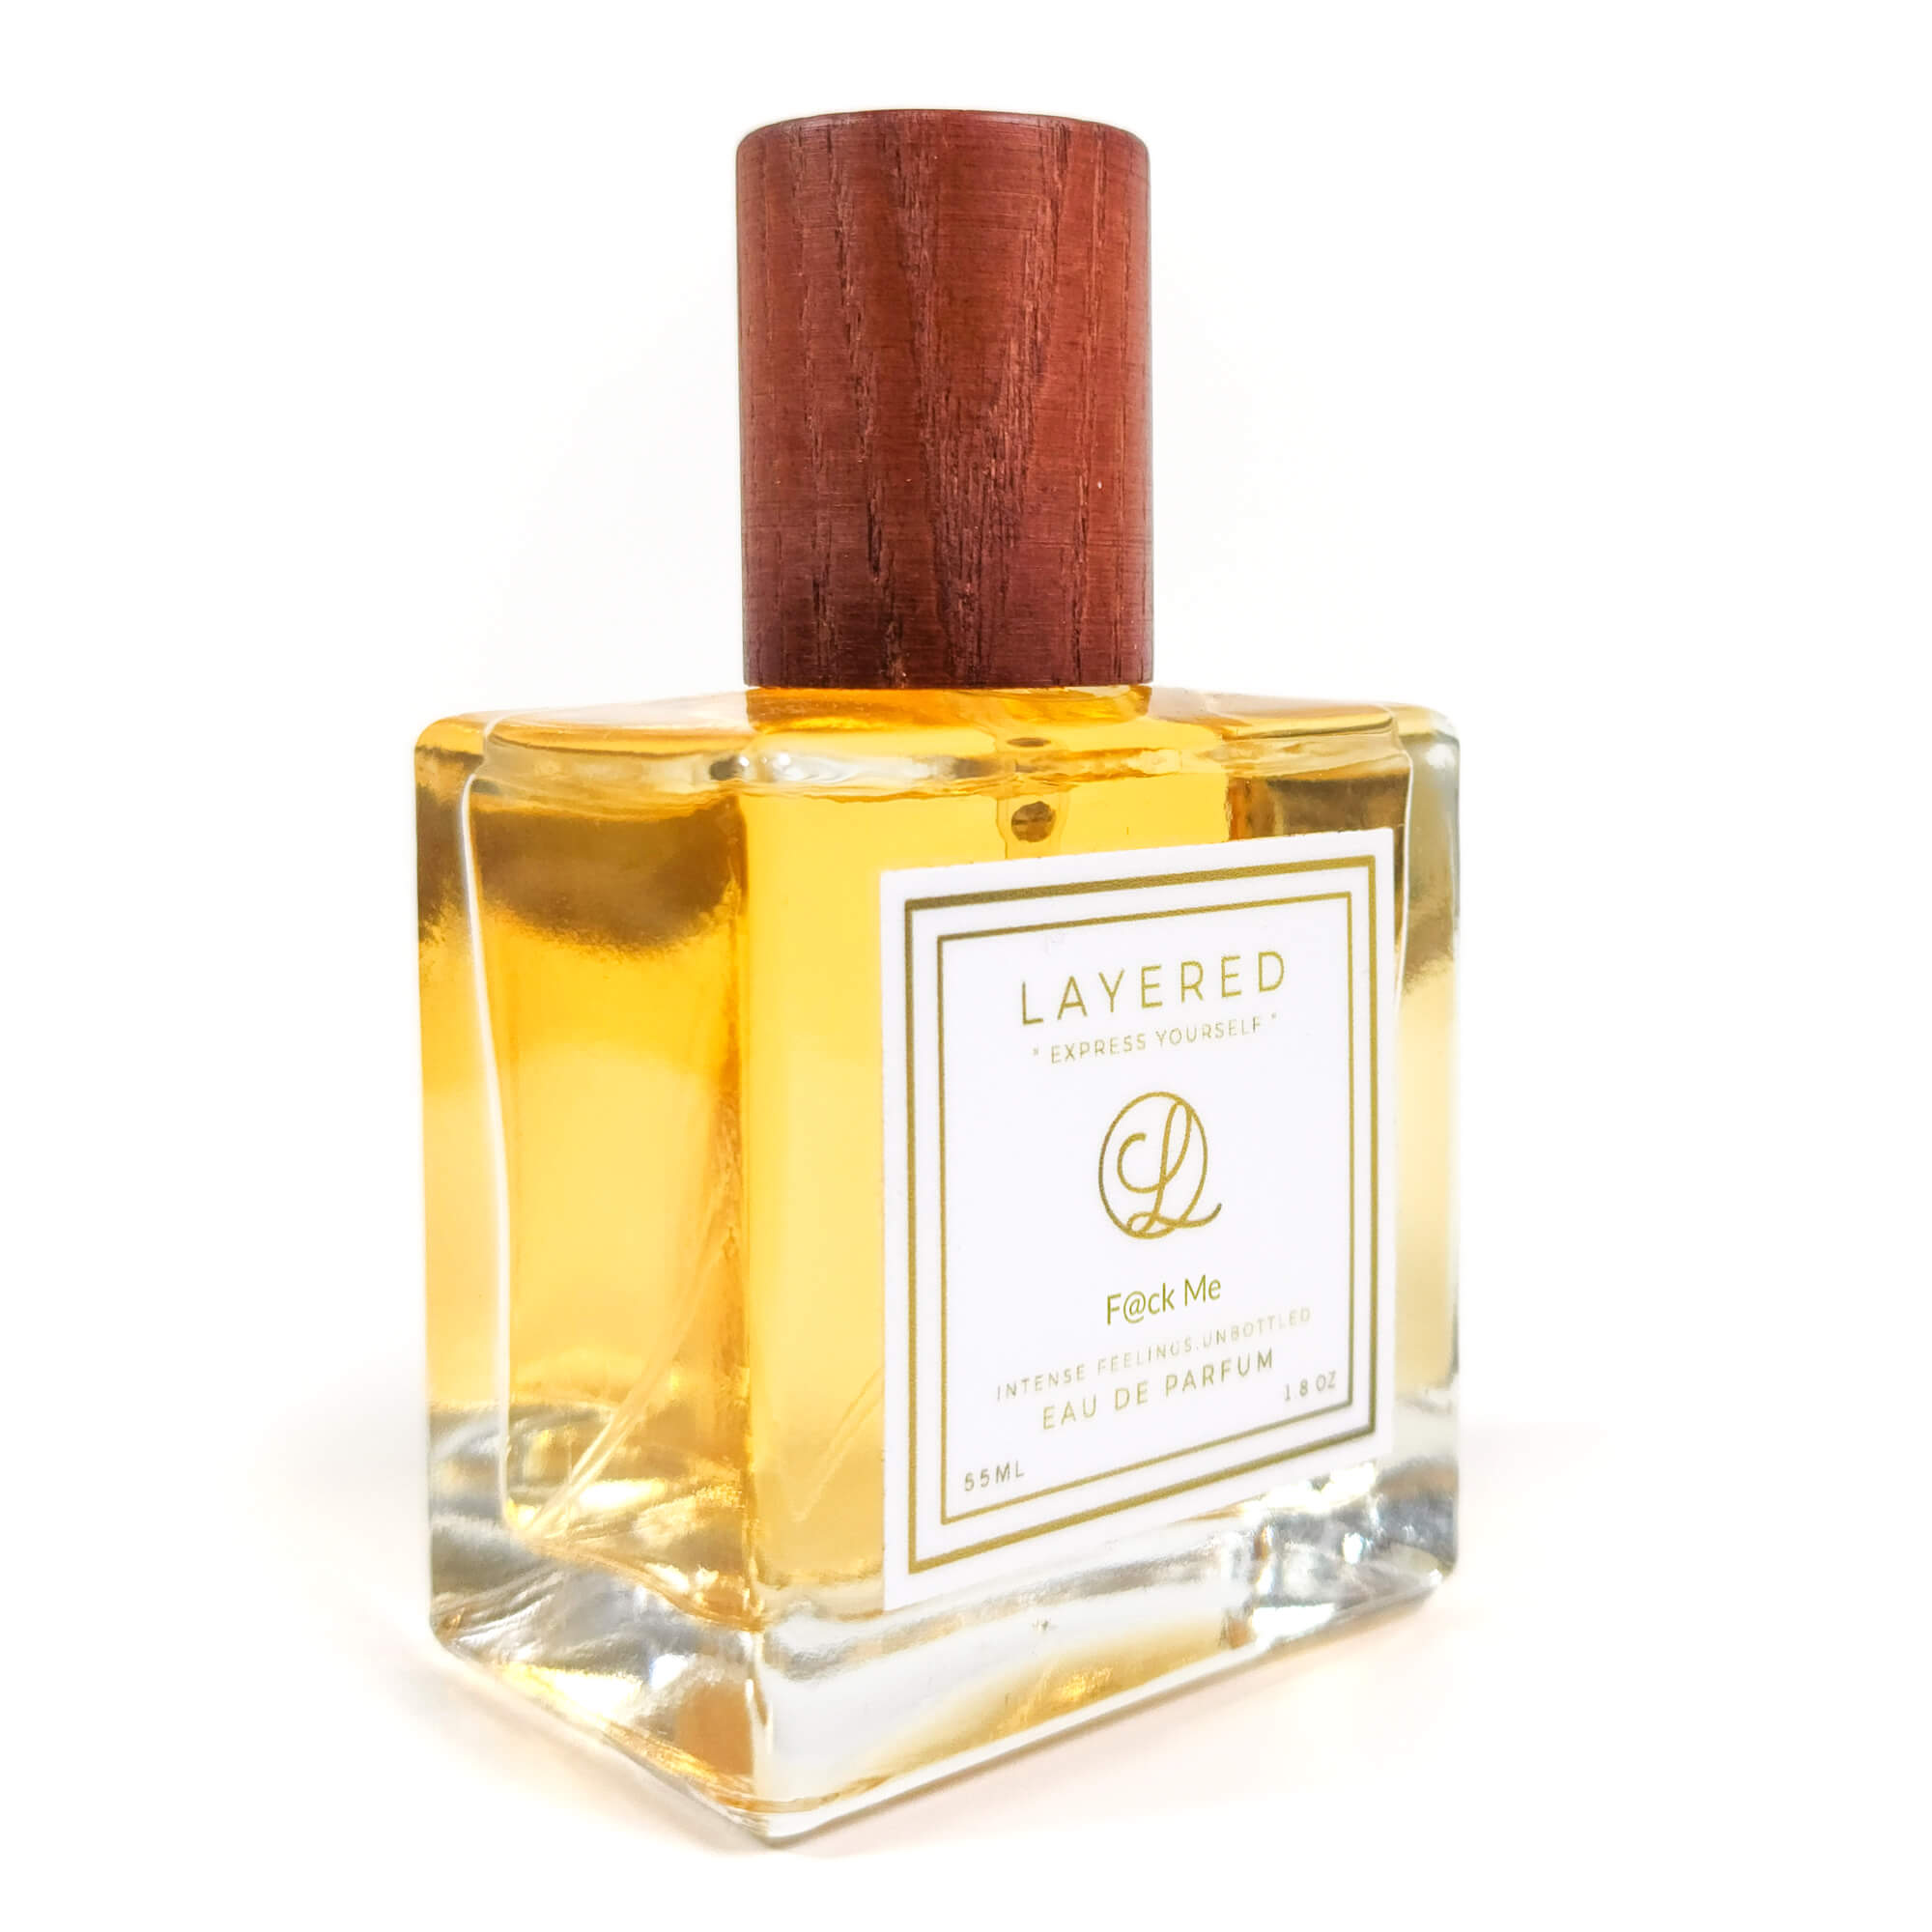 CK One – Perfume Express